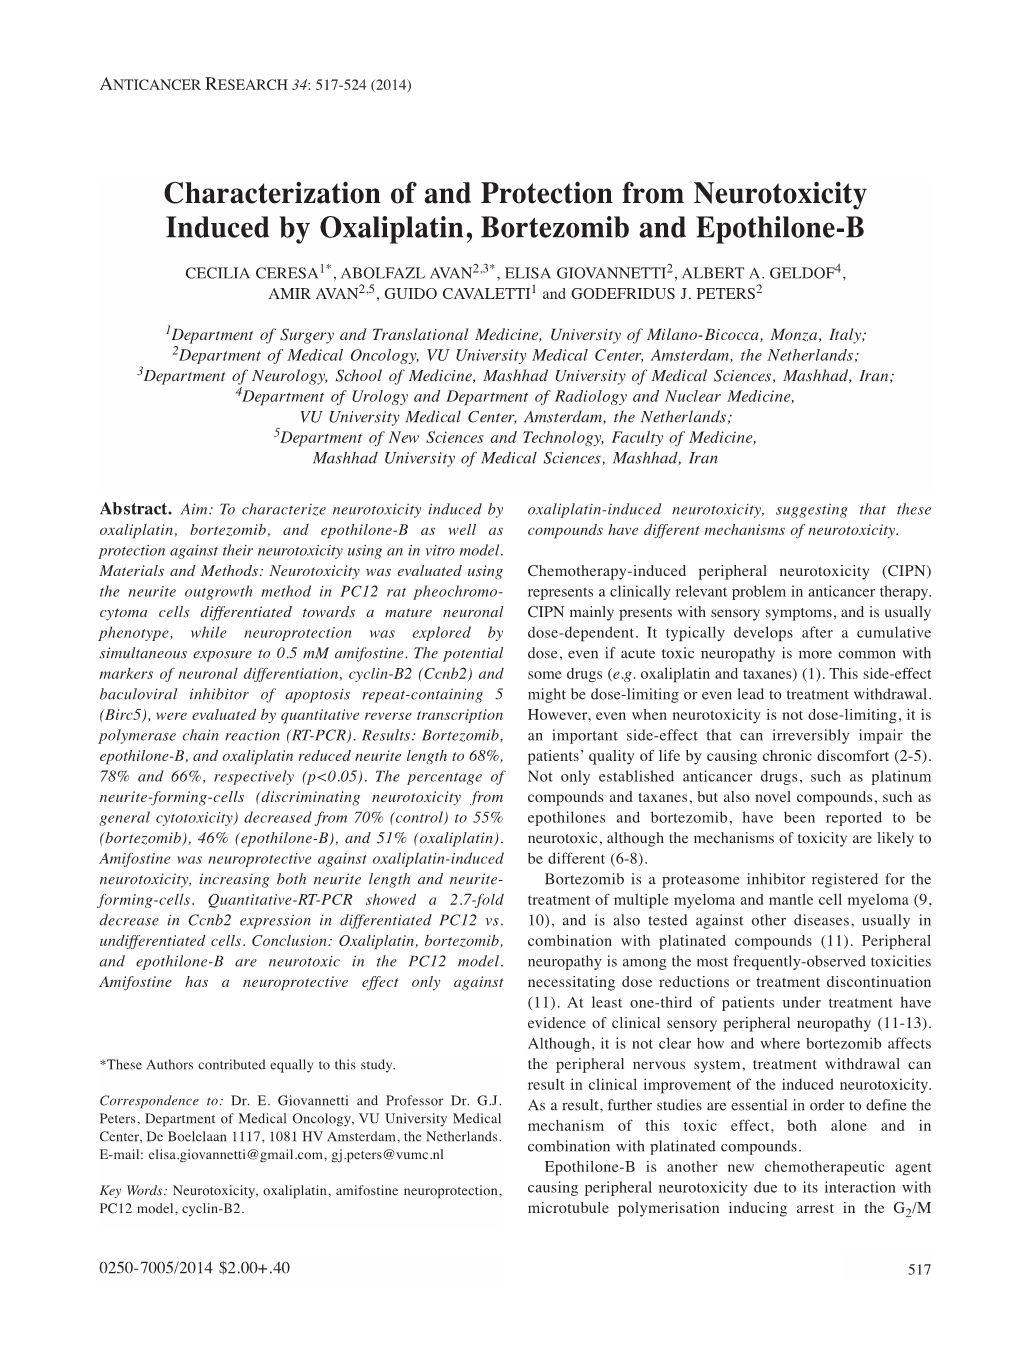 Characterization of and Protection from Neurotoxicity Induced by Oxaliplatin, Bortezomib and Epothilone-B